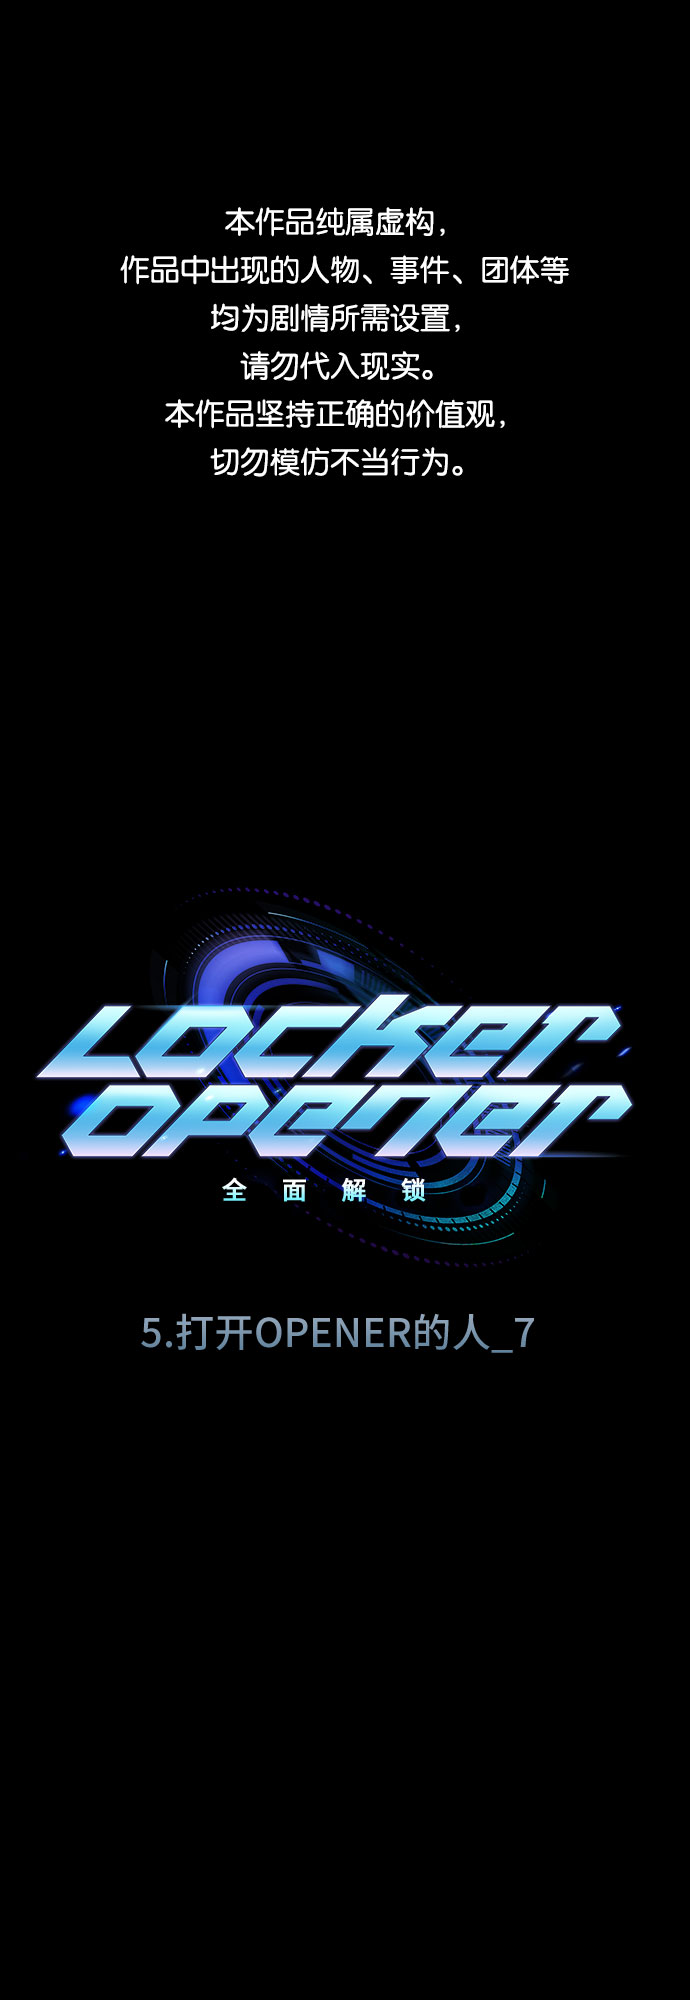 LOCKER OPENER 全面解锁 - [第71话] 打开OPENER的人_7(1/2) - 1